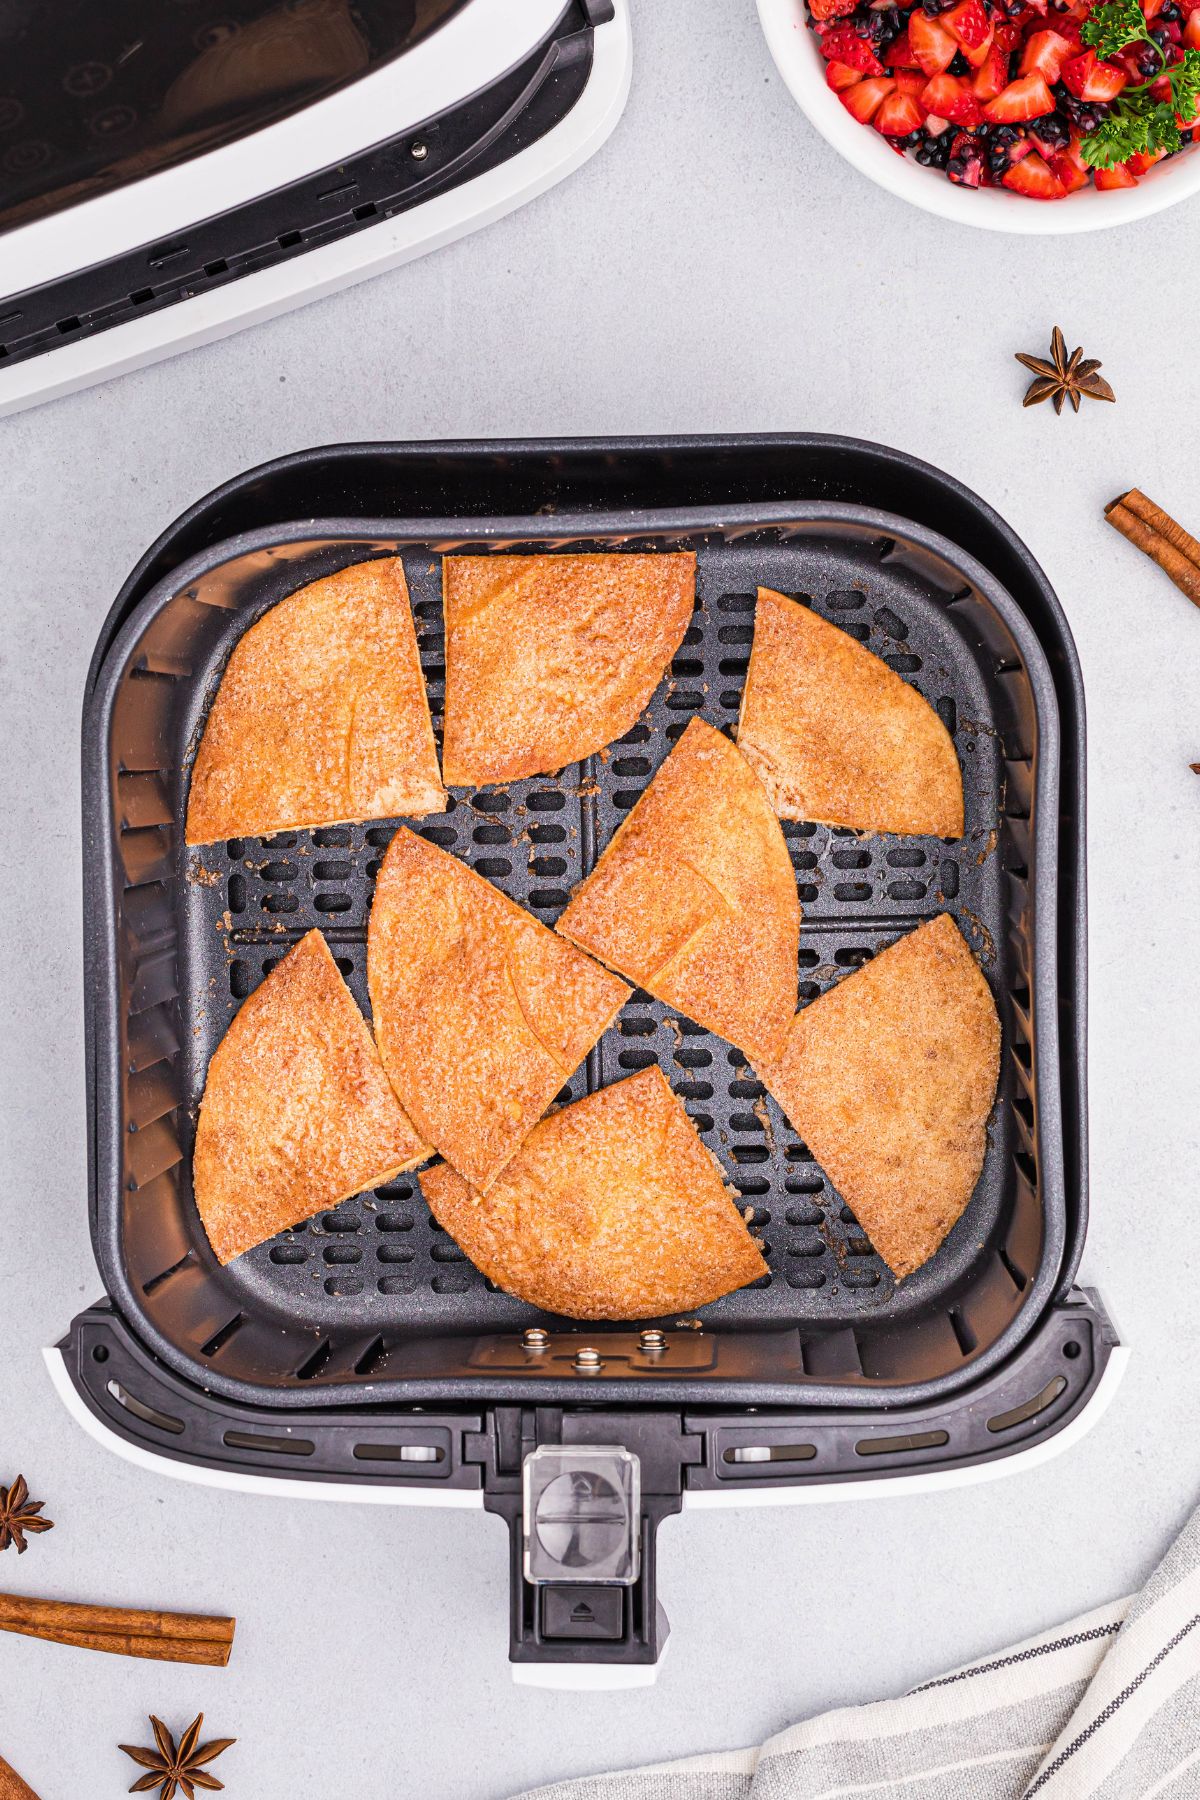 Golden crispy tortilla chips in the air fryer basket